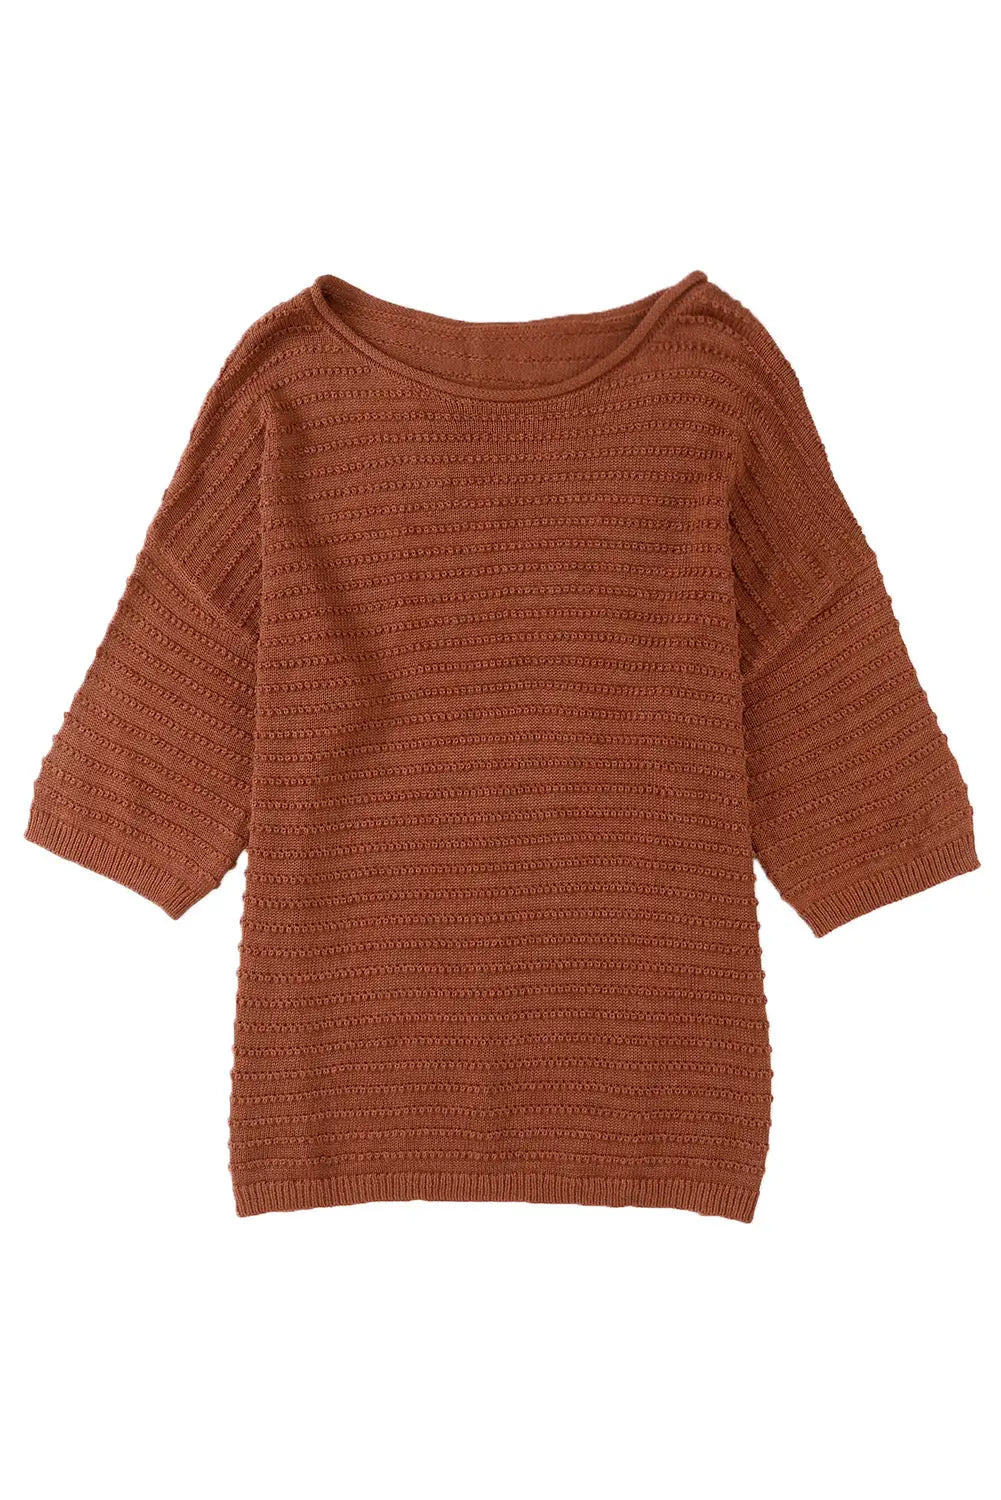 Textured knit drop shoulder tee - t-shirts